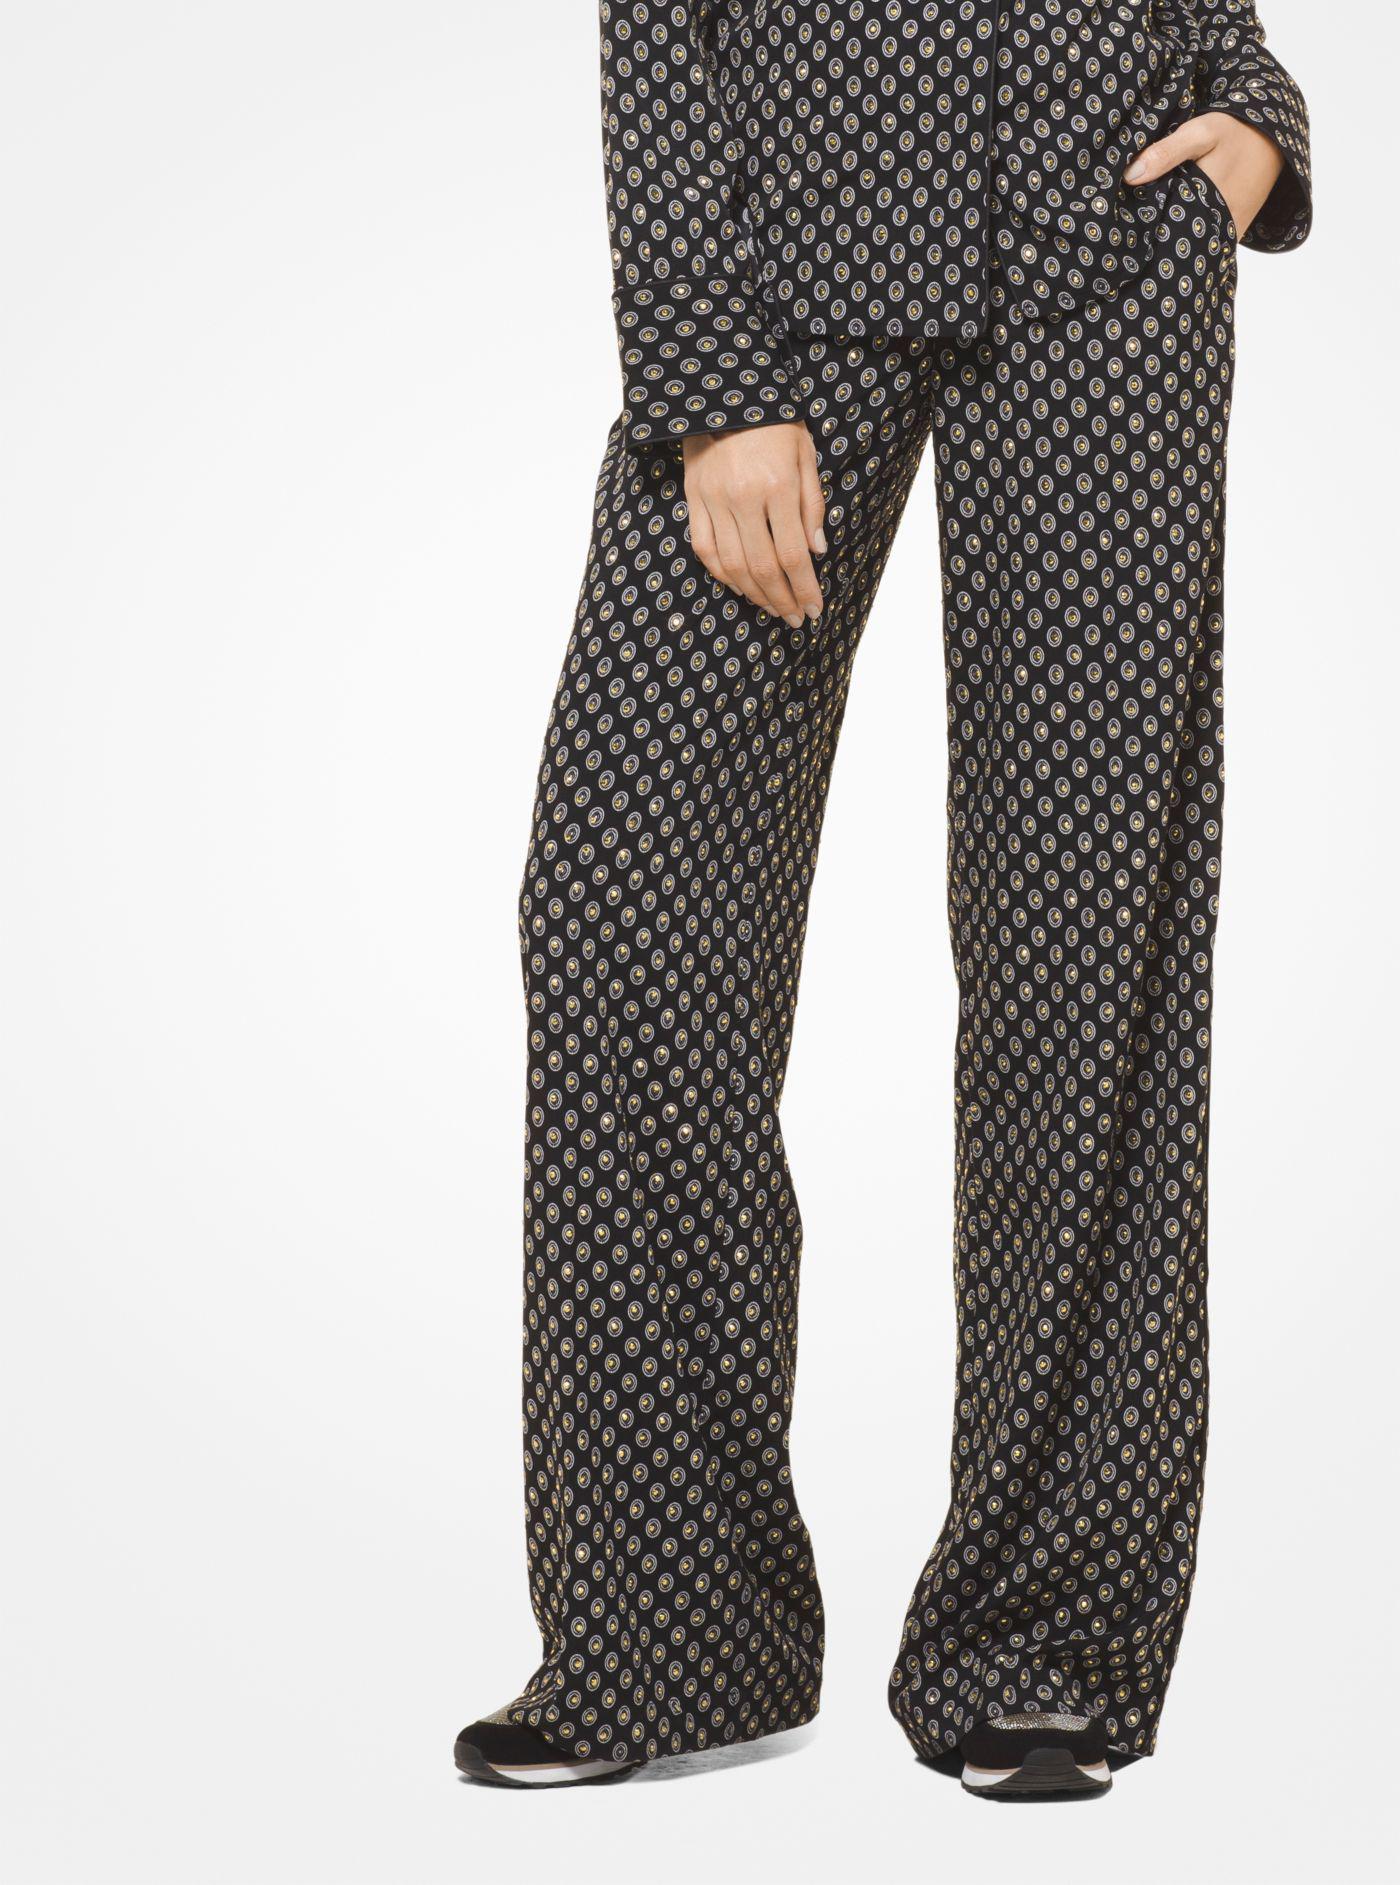 Michael Kors Synthetic Studded Medallion Pajama Pants in Black/Bone (Black)  - Lyst